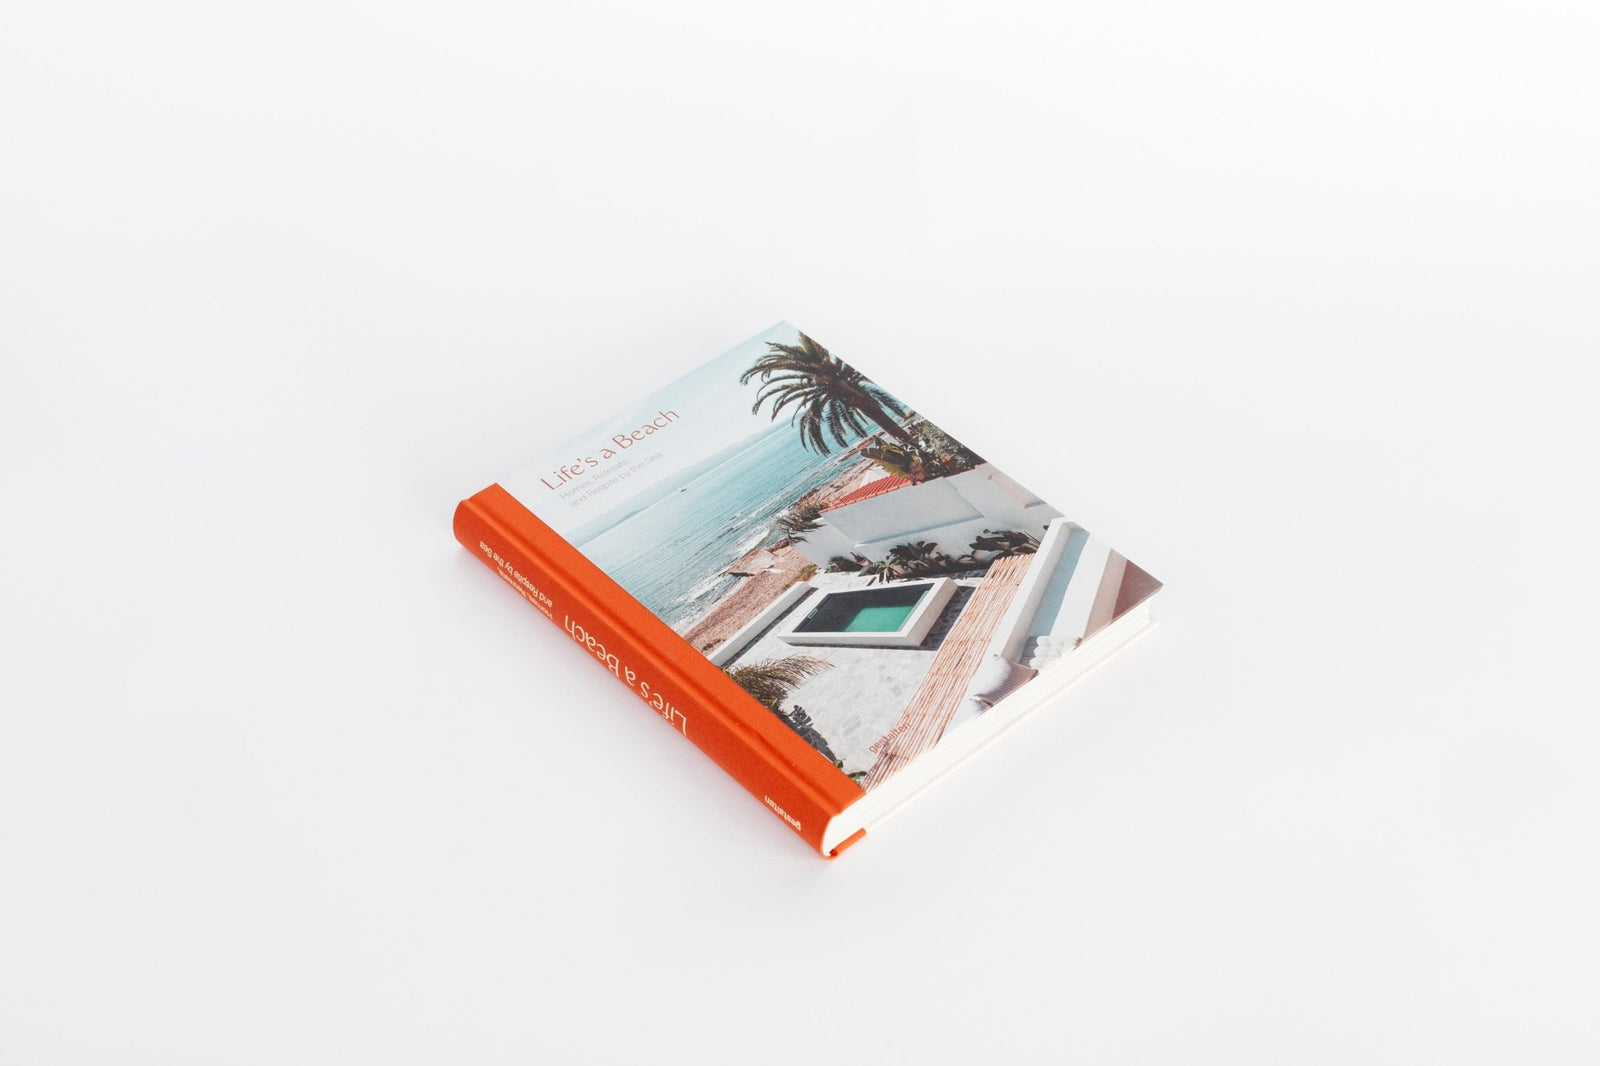 Lifes A Beach Hard Cover Book Interiors Hardcover Gestalten